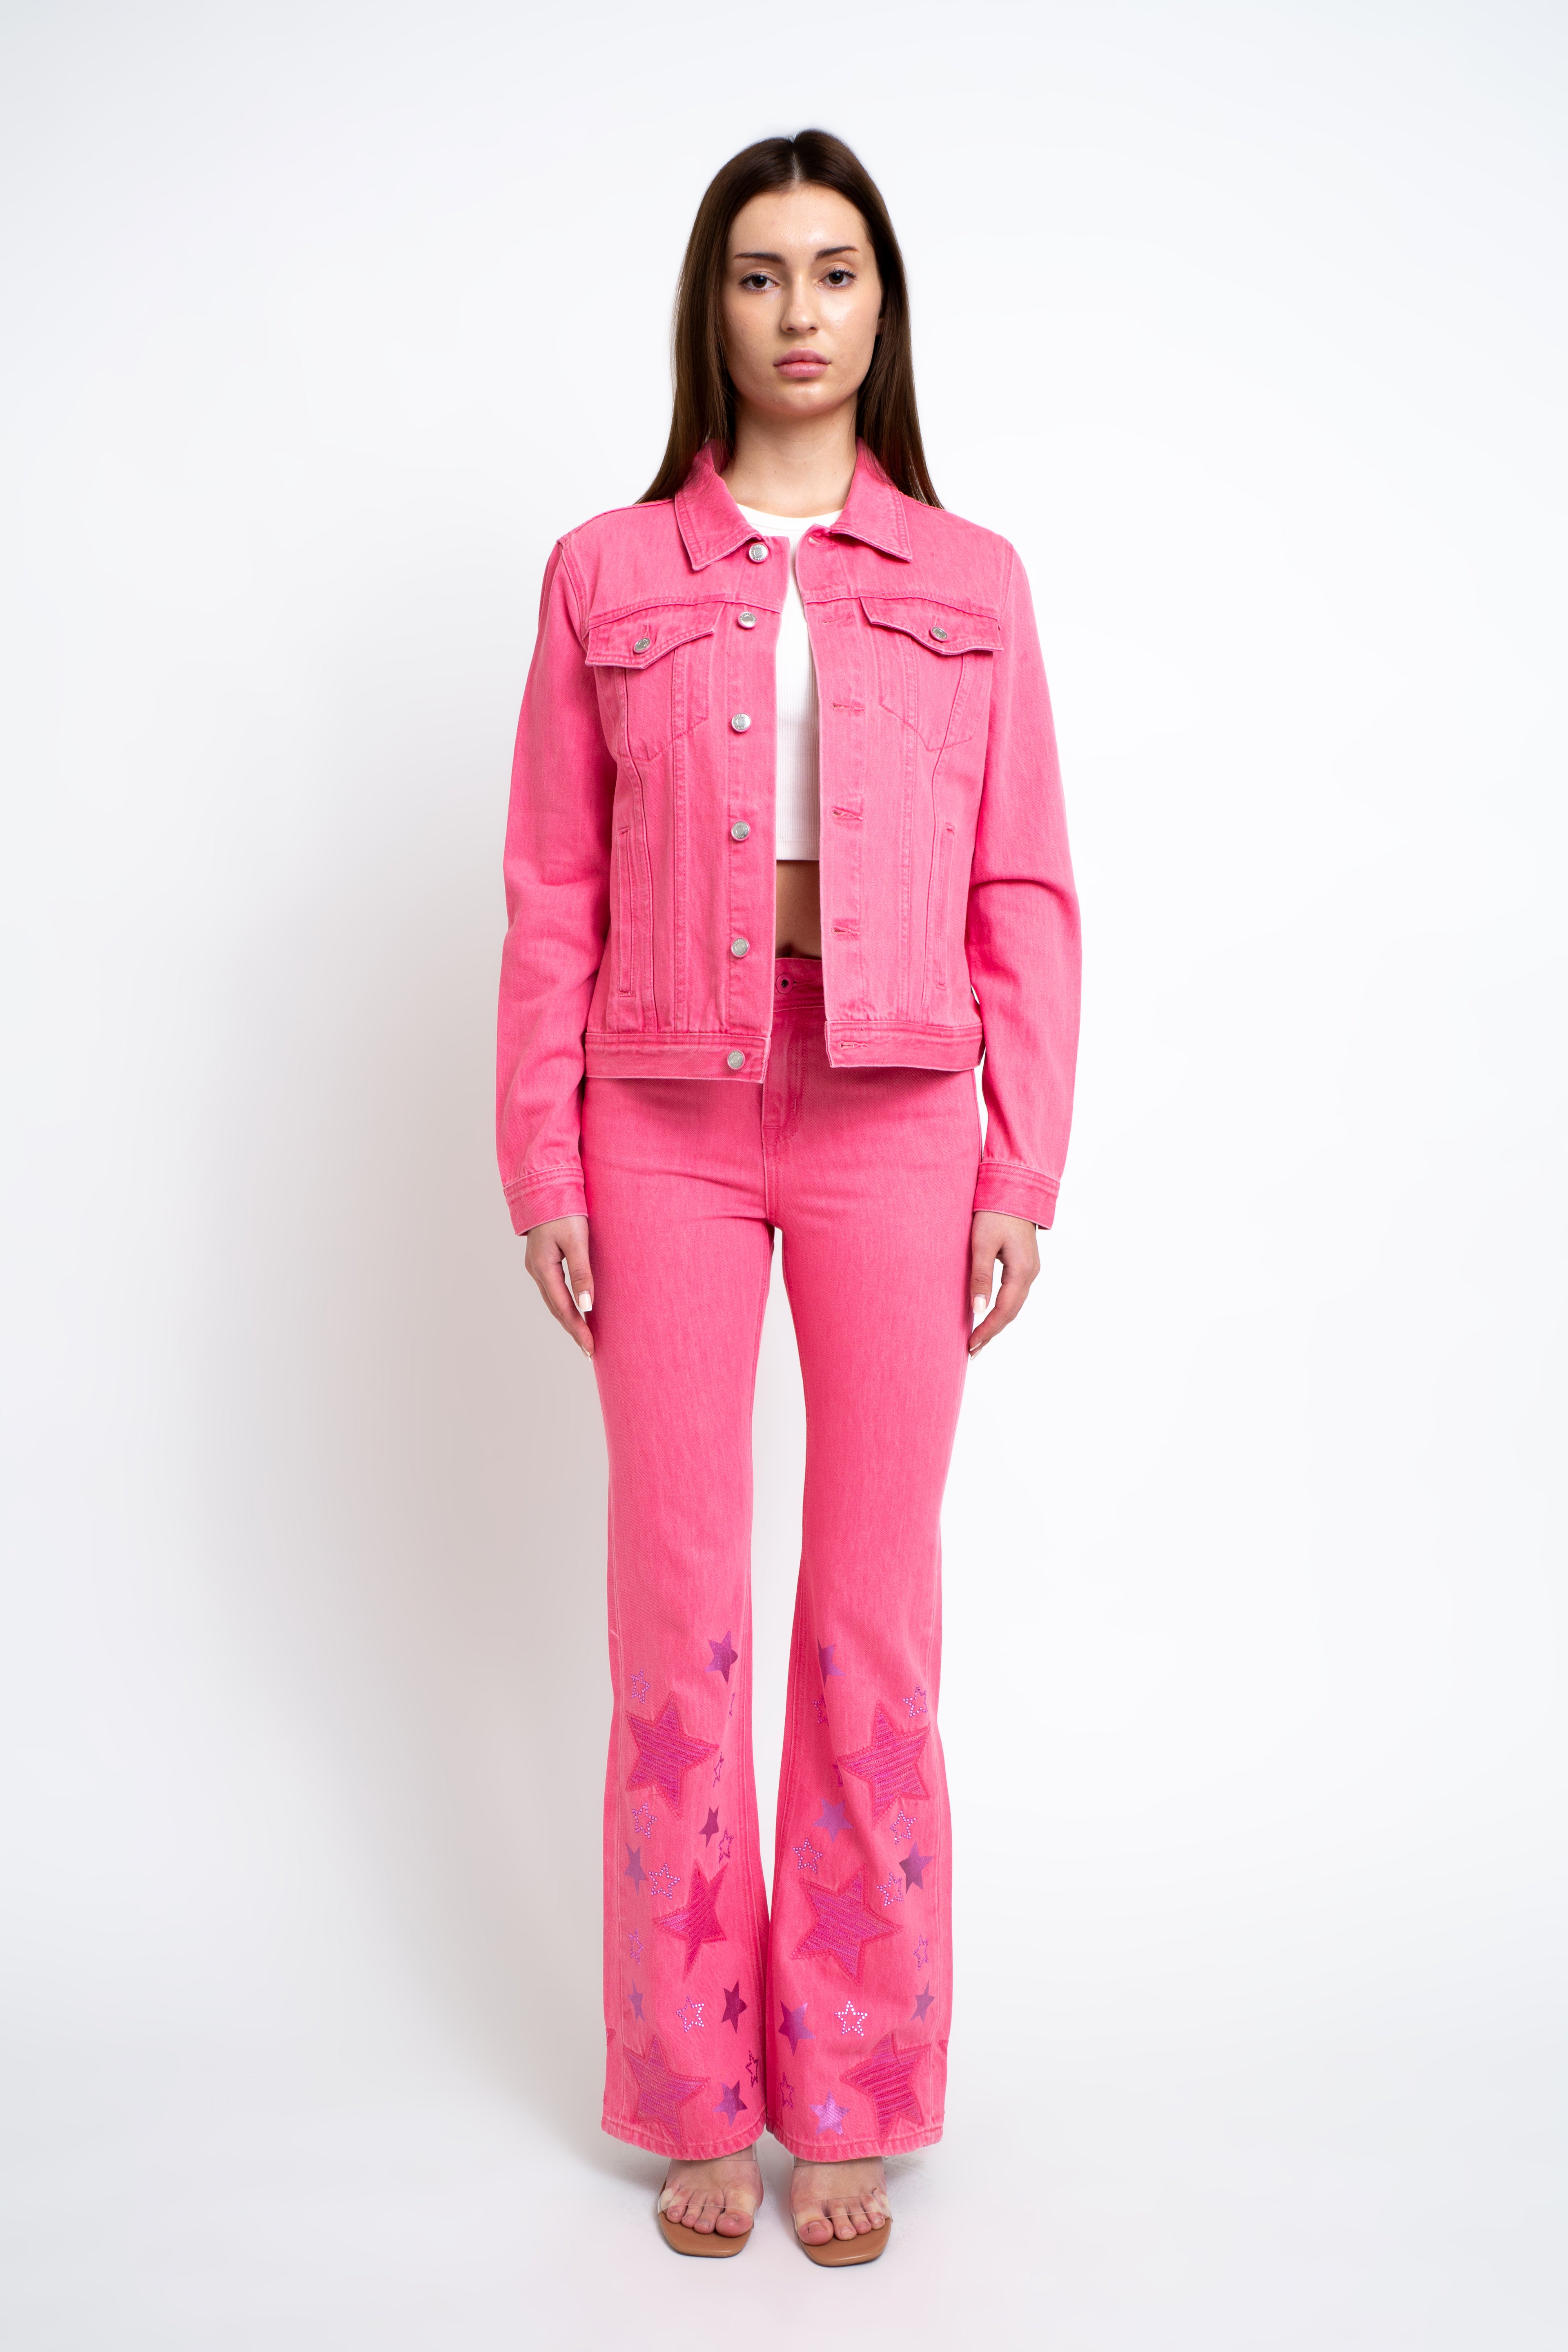 "Let's Go Girls" Embroidery Pink Denim Jacket